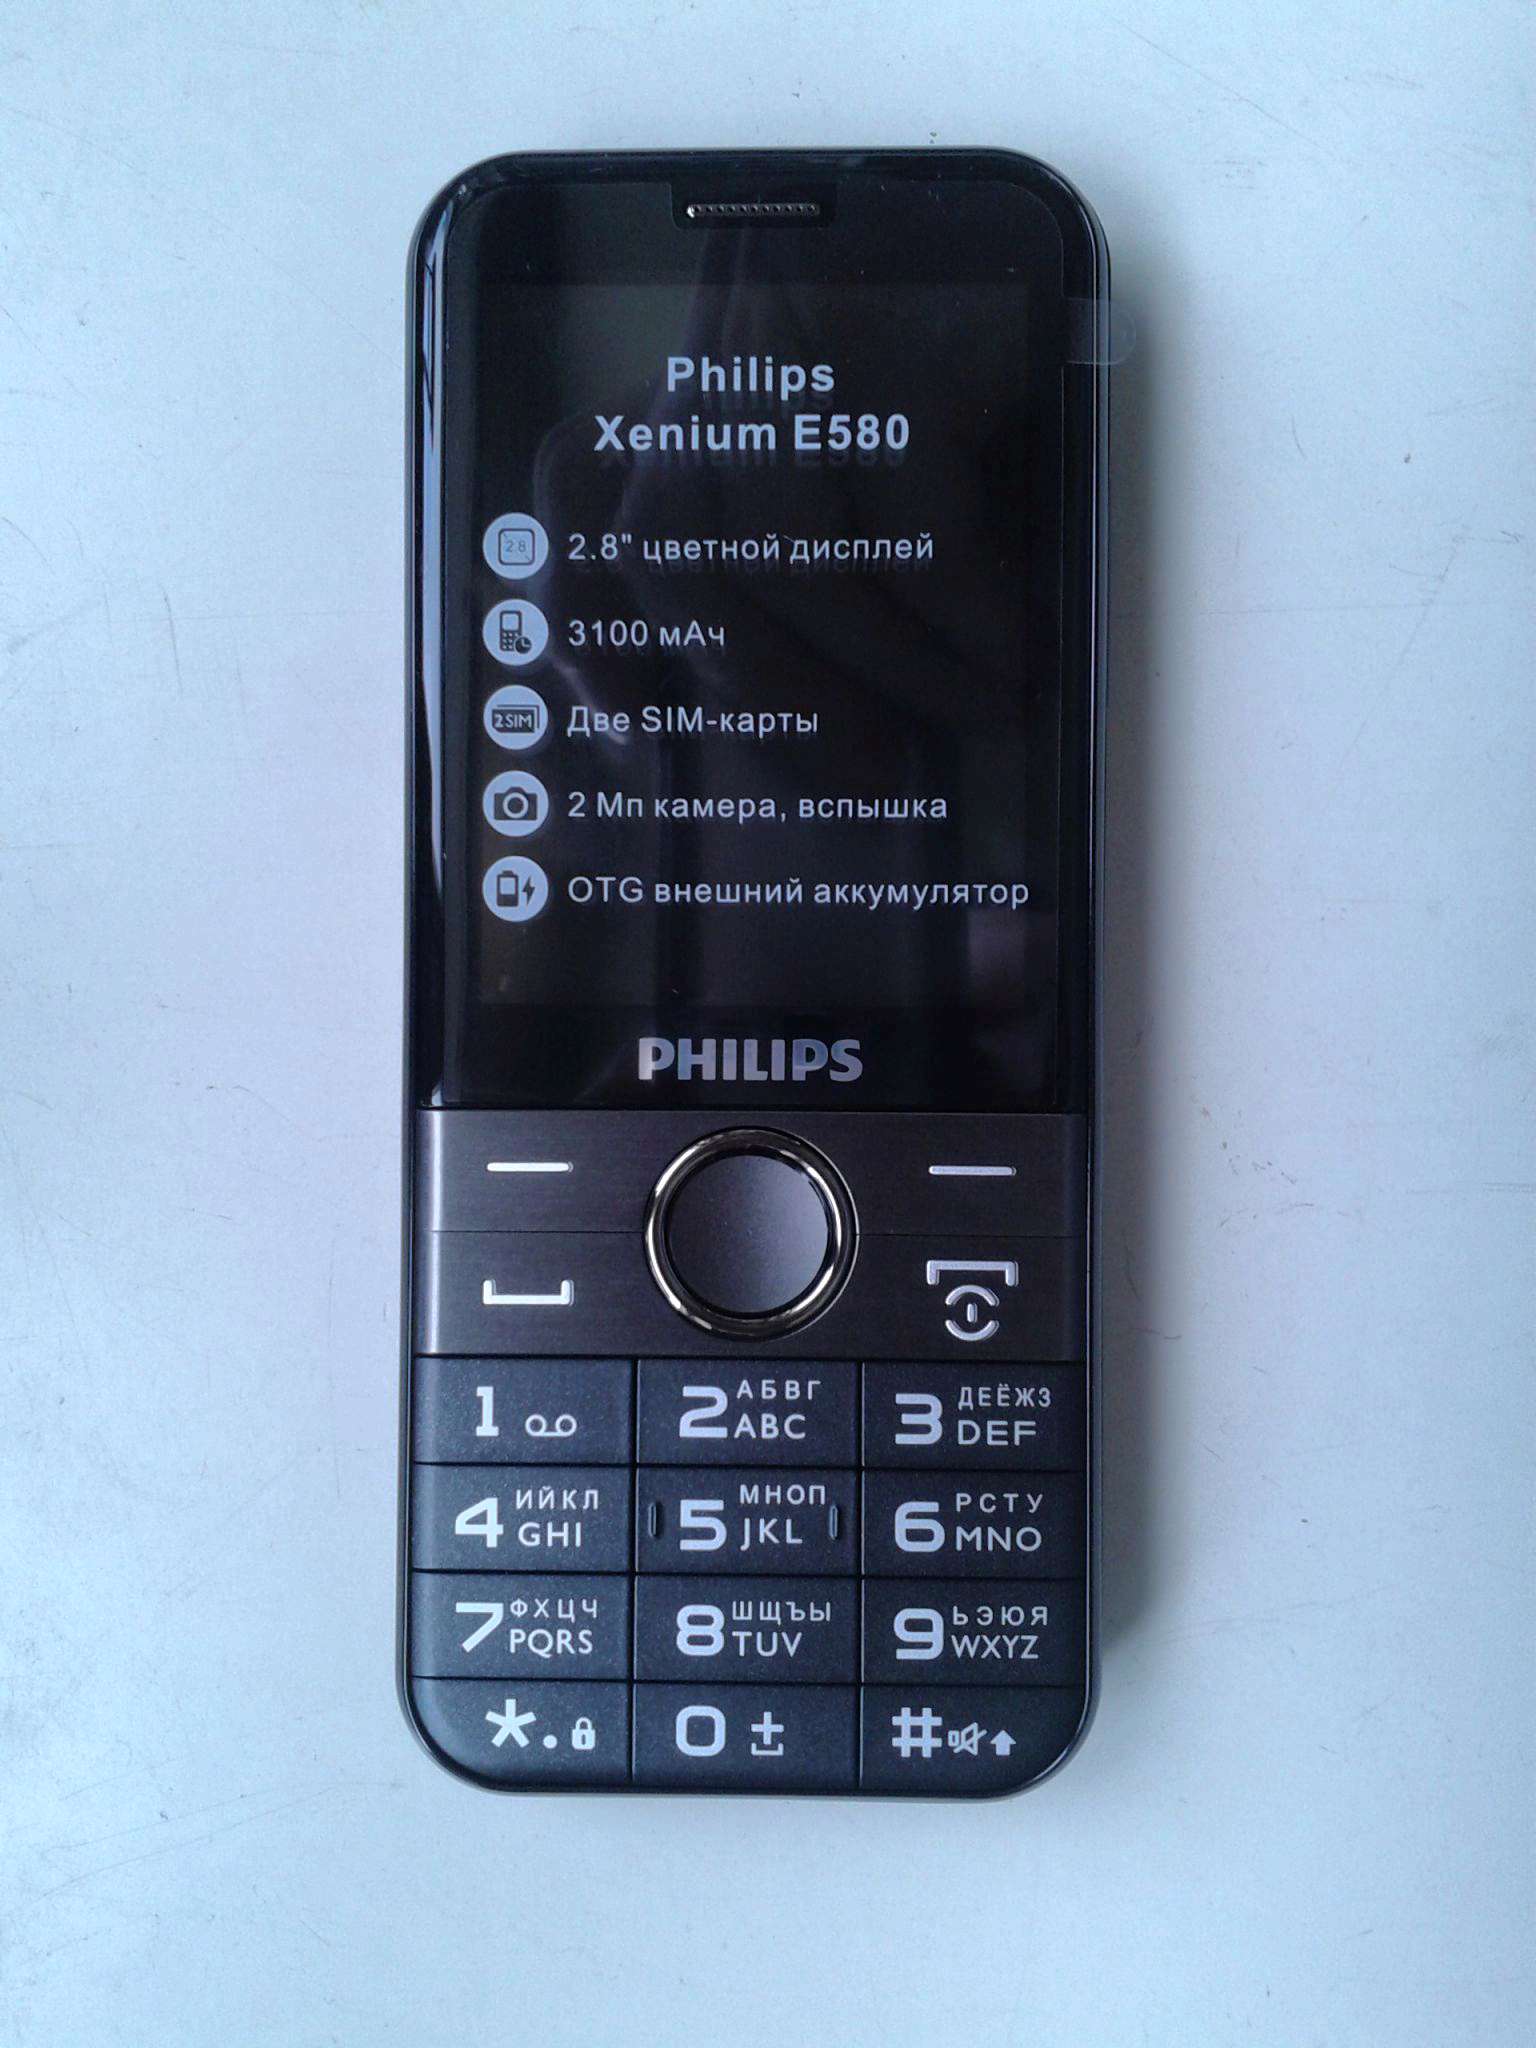 Xenium e590 black. Philips Xenium e580. Philips Xenium 580. Филипс хениум е 580. Philips Xenium e580 (черный).